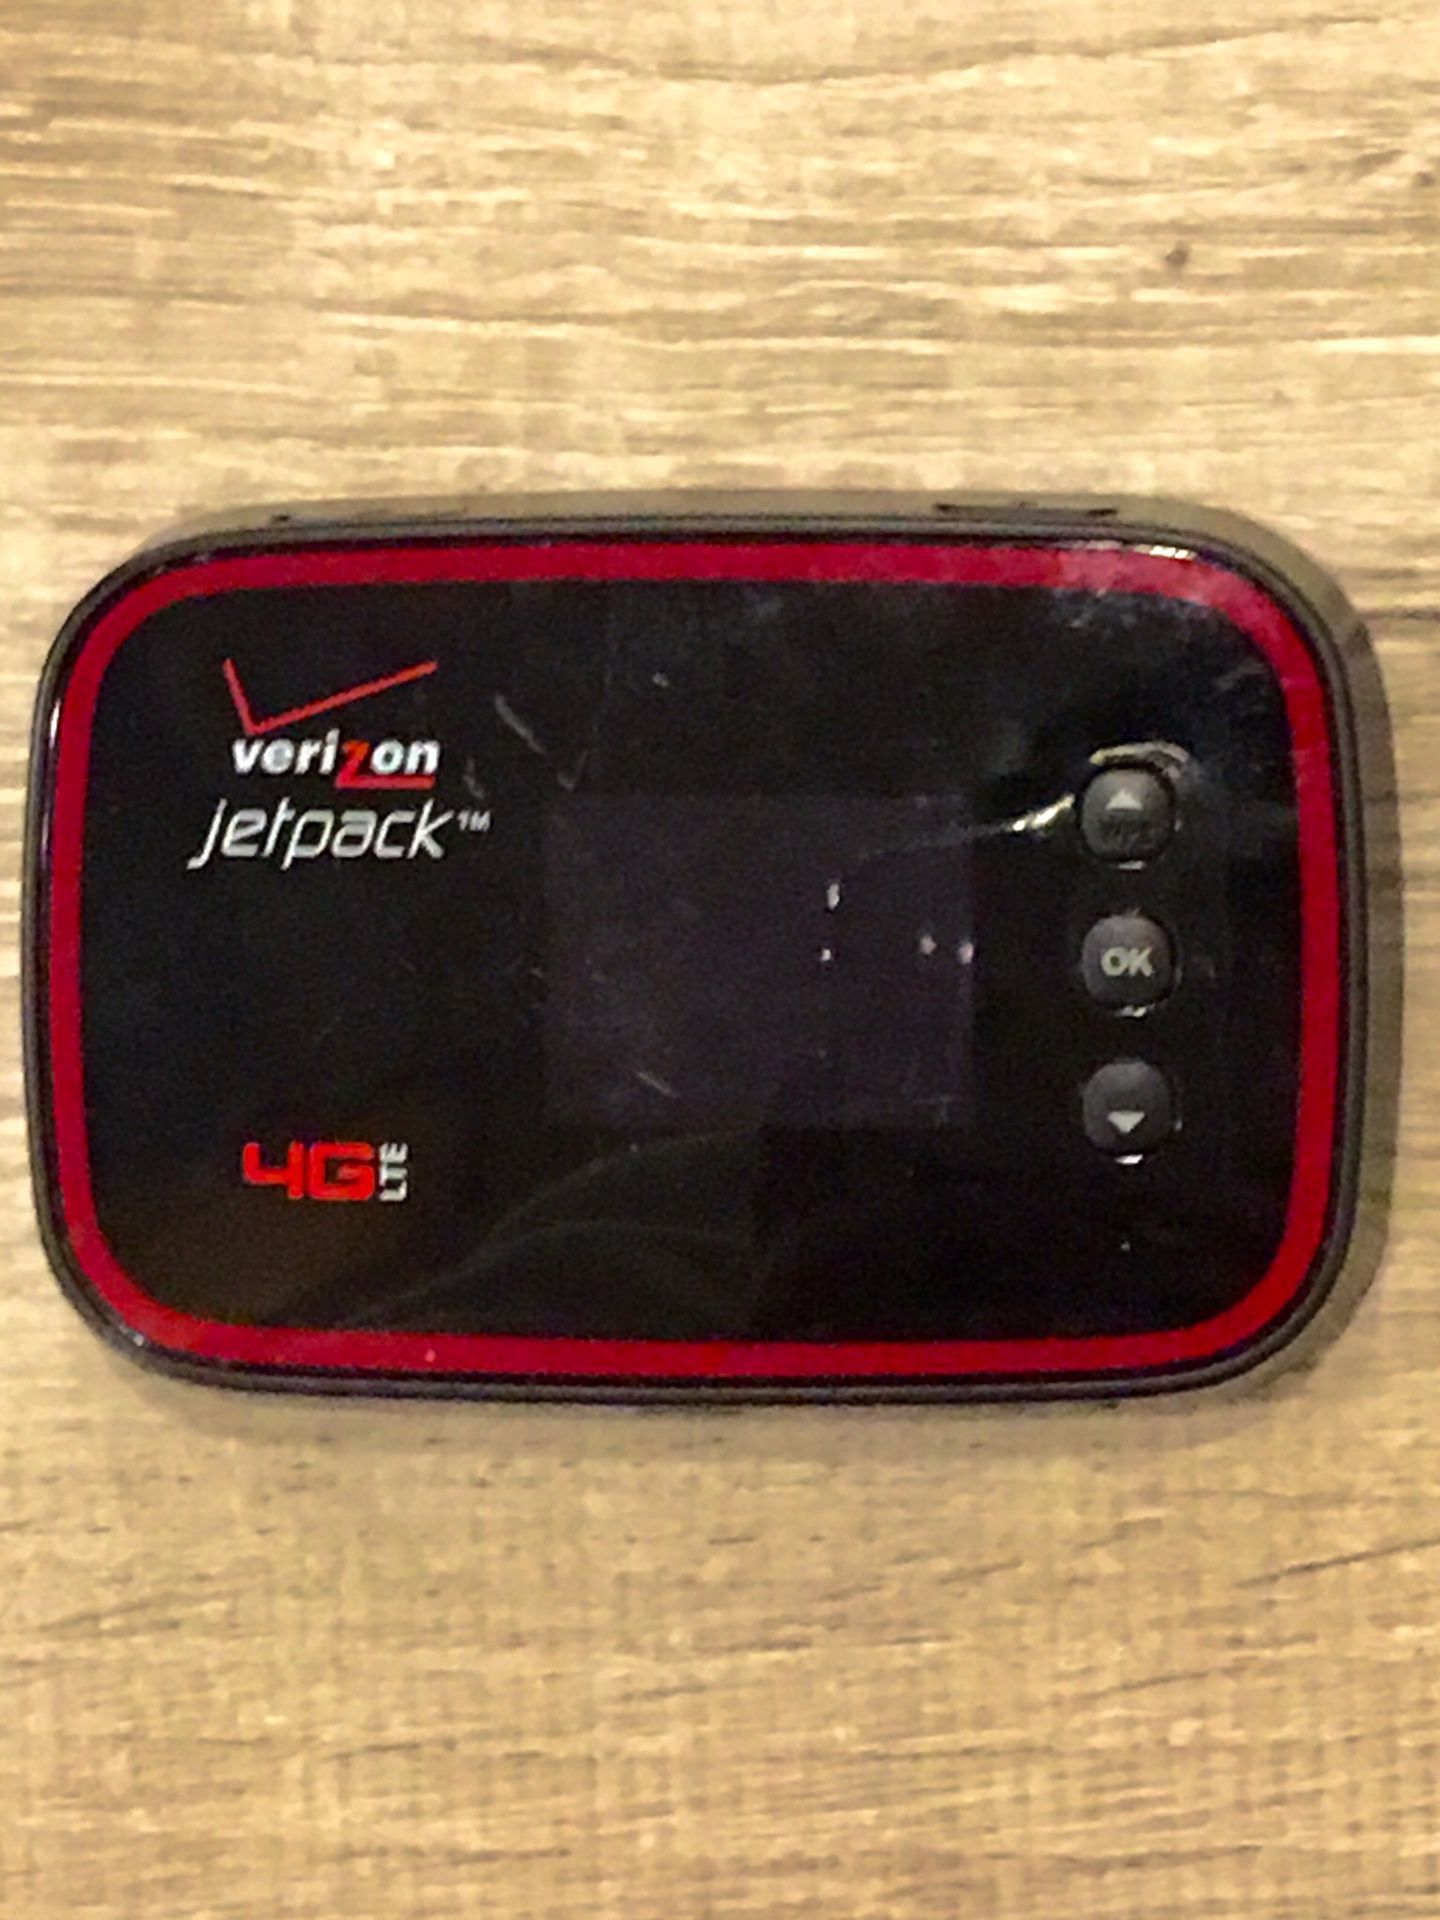 Verizon 4g hotspot (portable wireless internet)